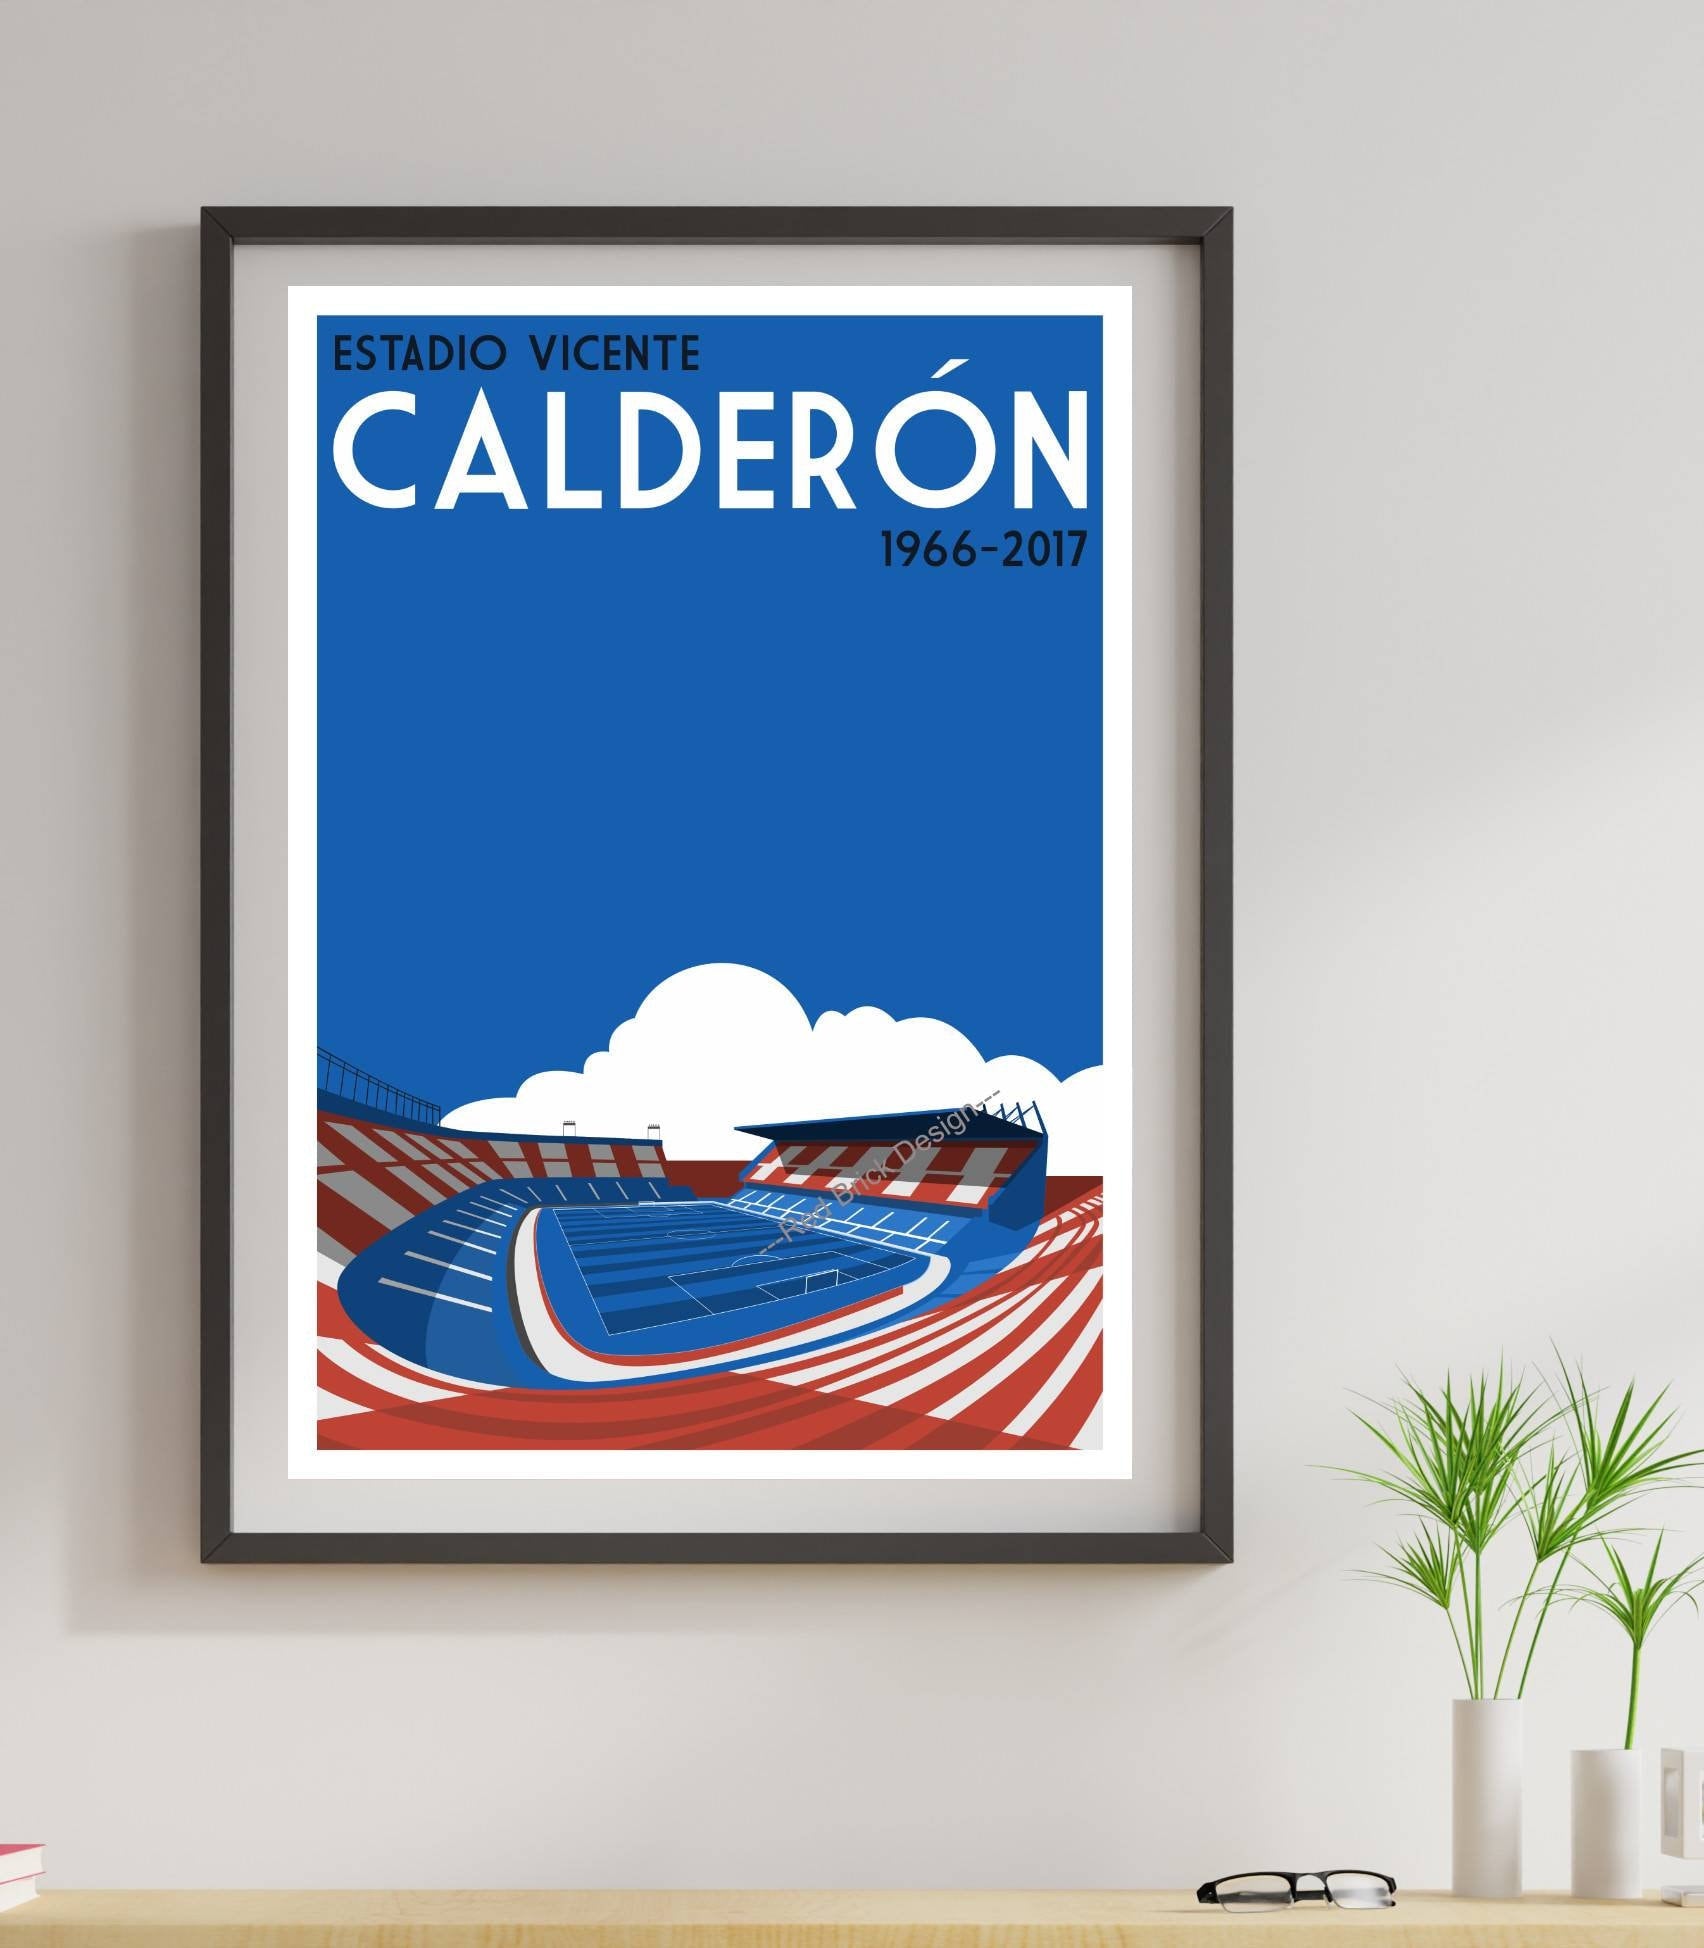 Vicente Caldern Stadium Poster